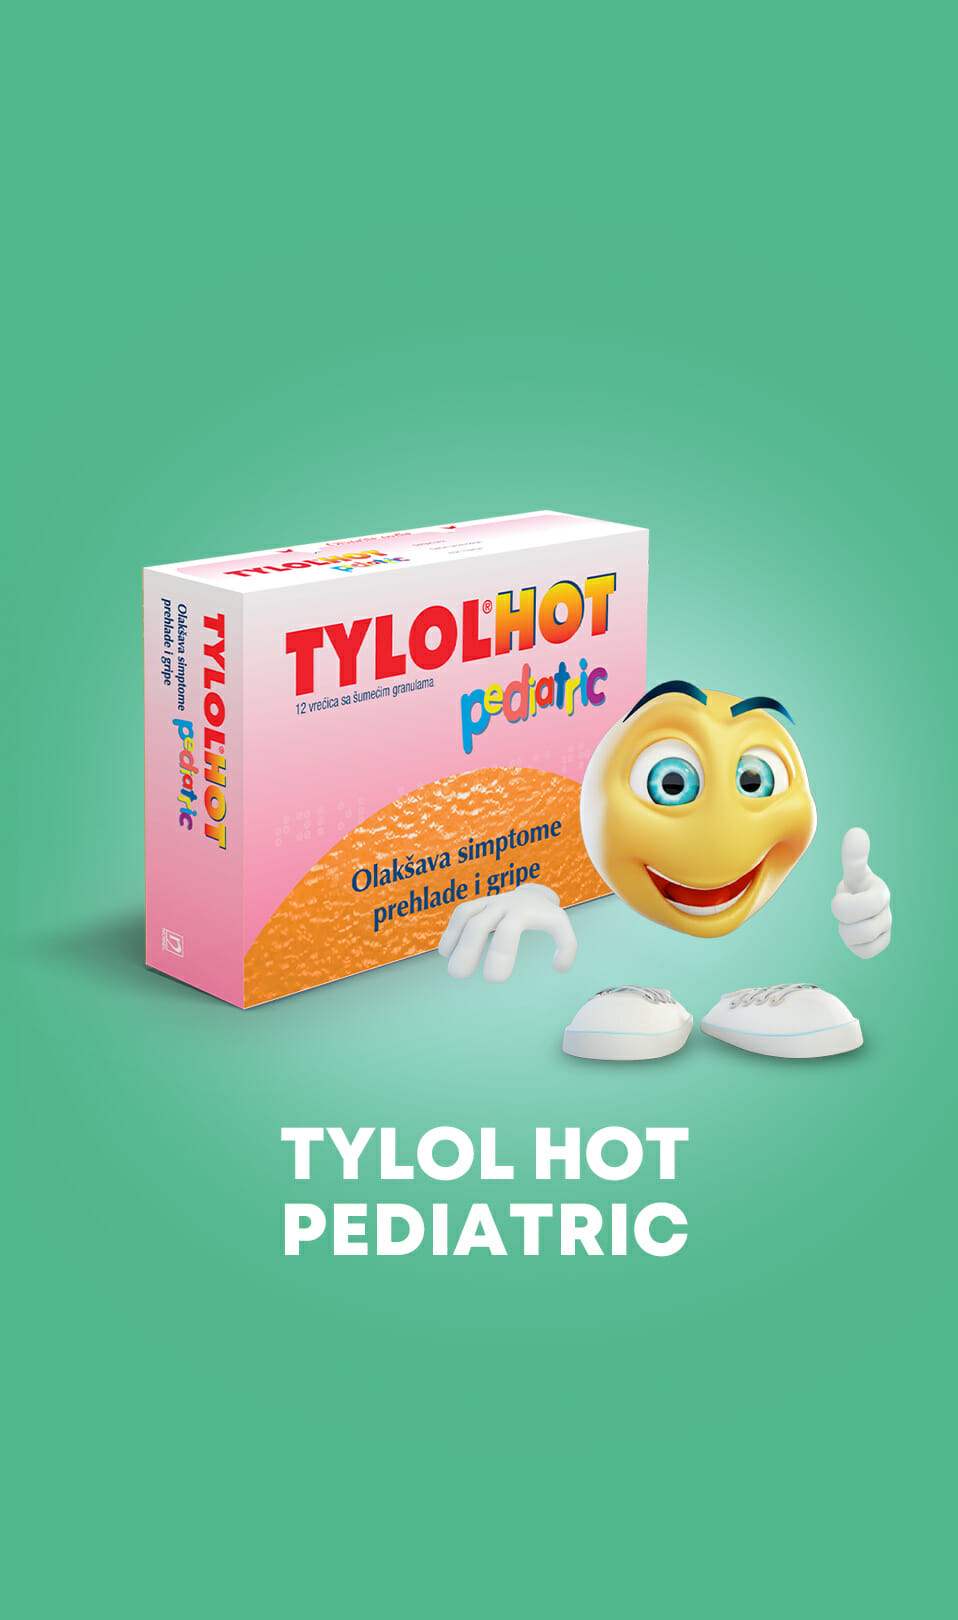 Tylol hot pediatric